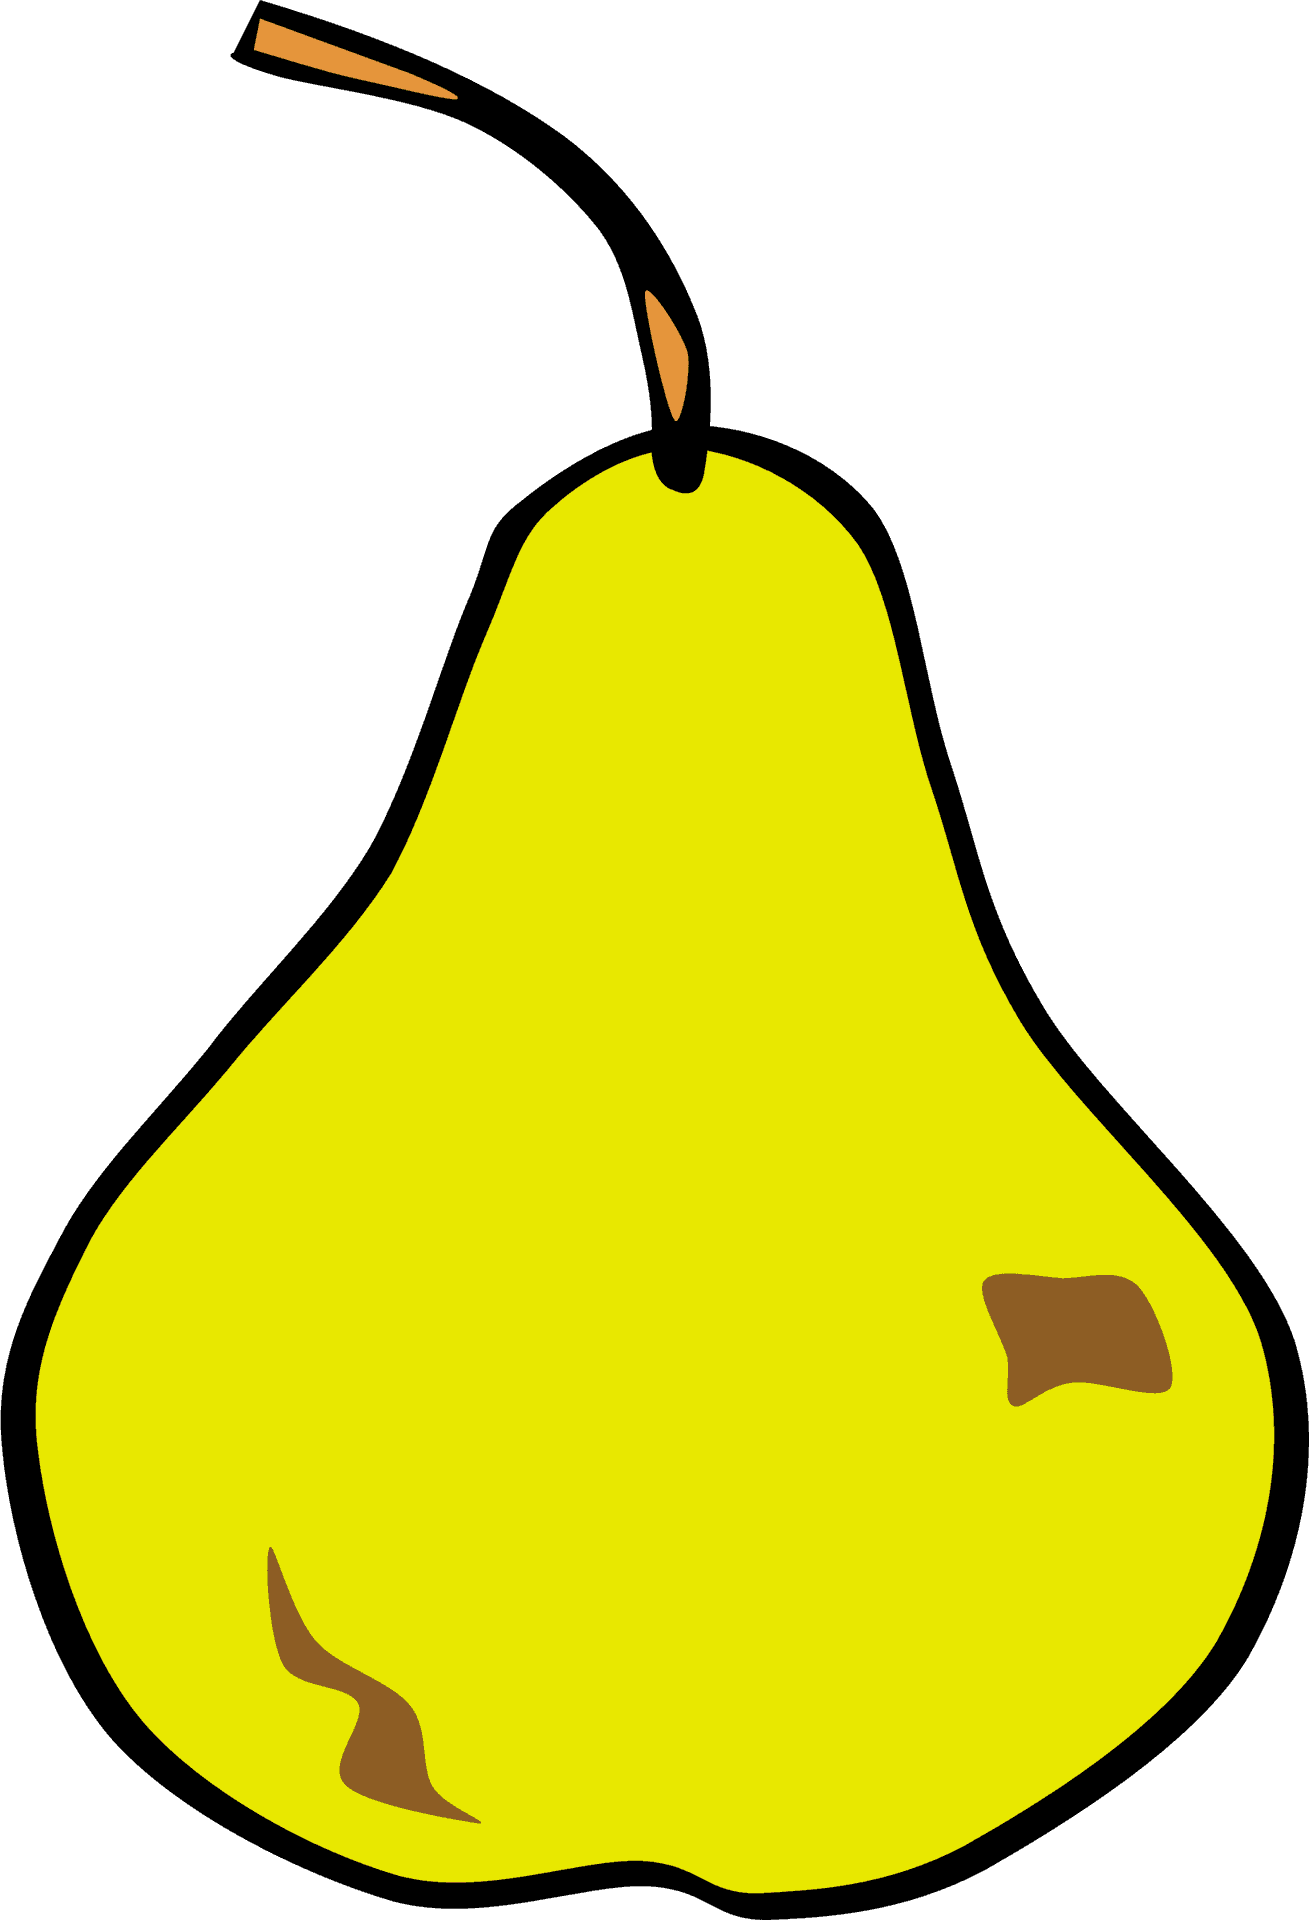 Cartoon Yellow Pear Illustration PNG image